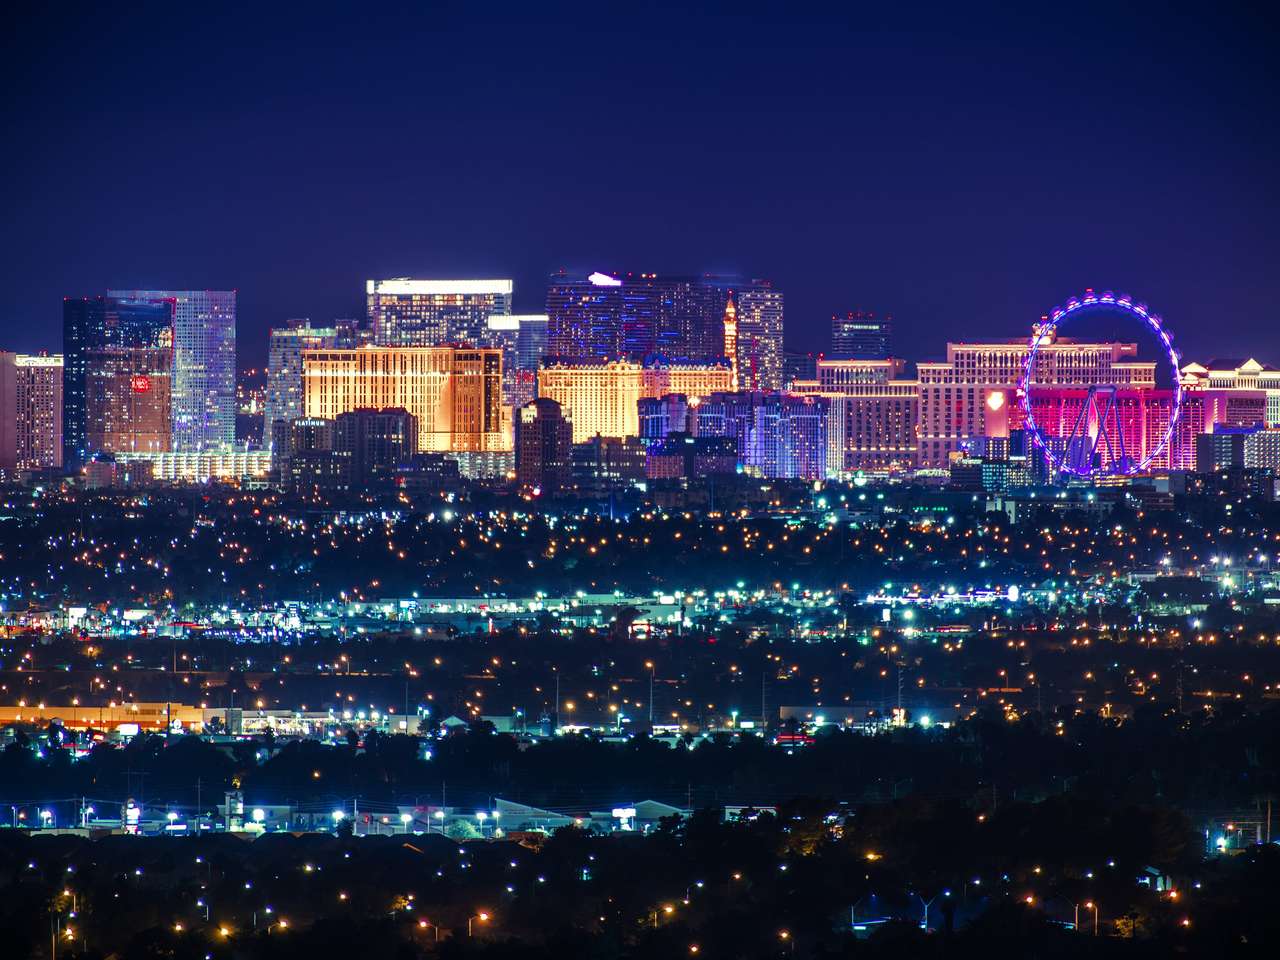 Horizonte y paisaje urbano de Las Vegas puzzle online a partir de foto